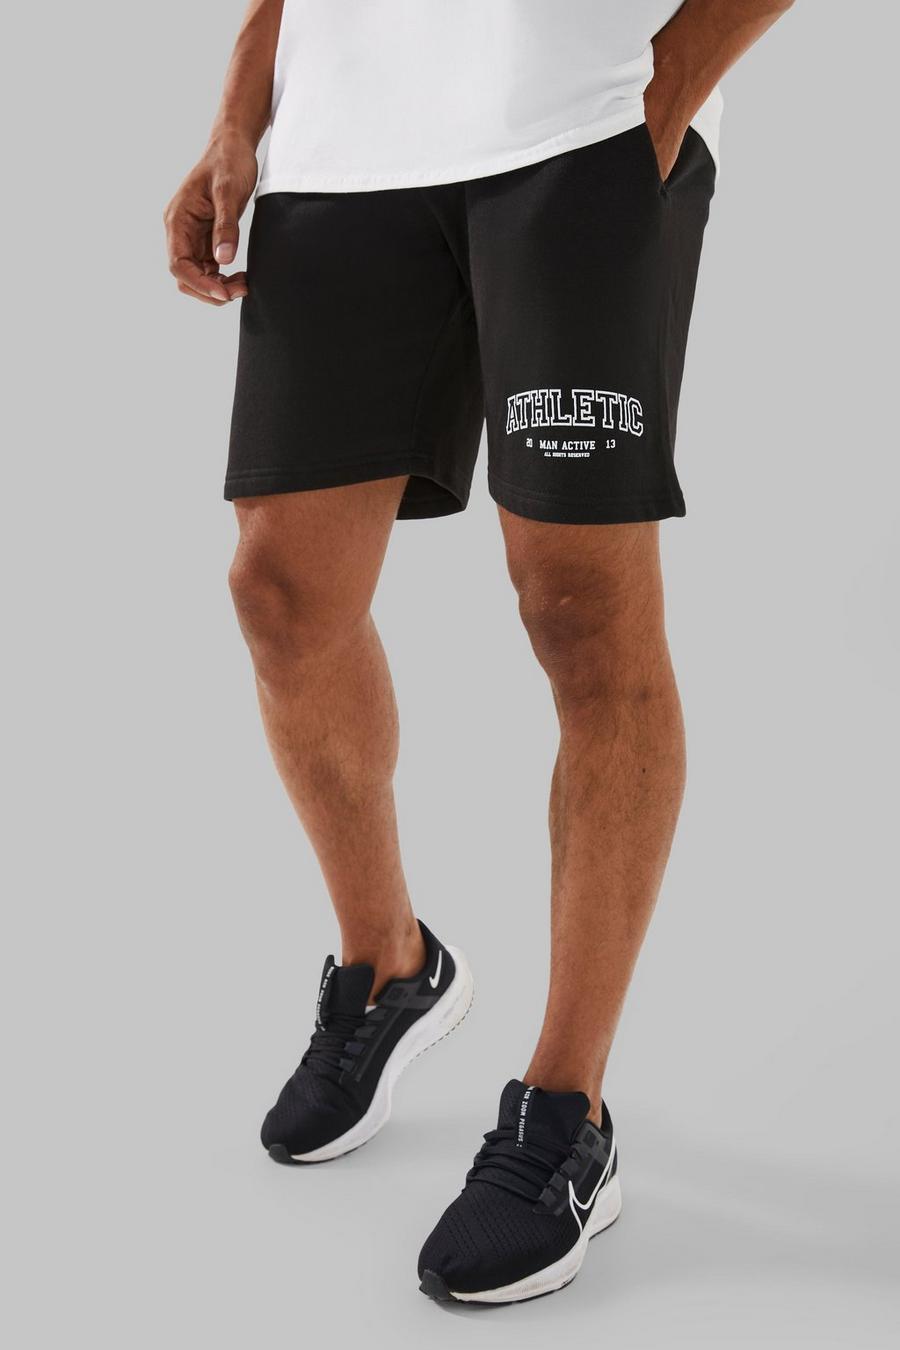 Black schwarz Man Active Athletic Shorts